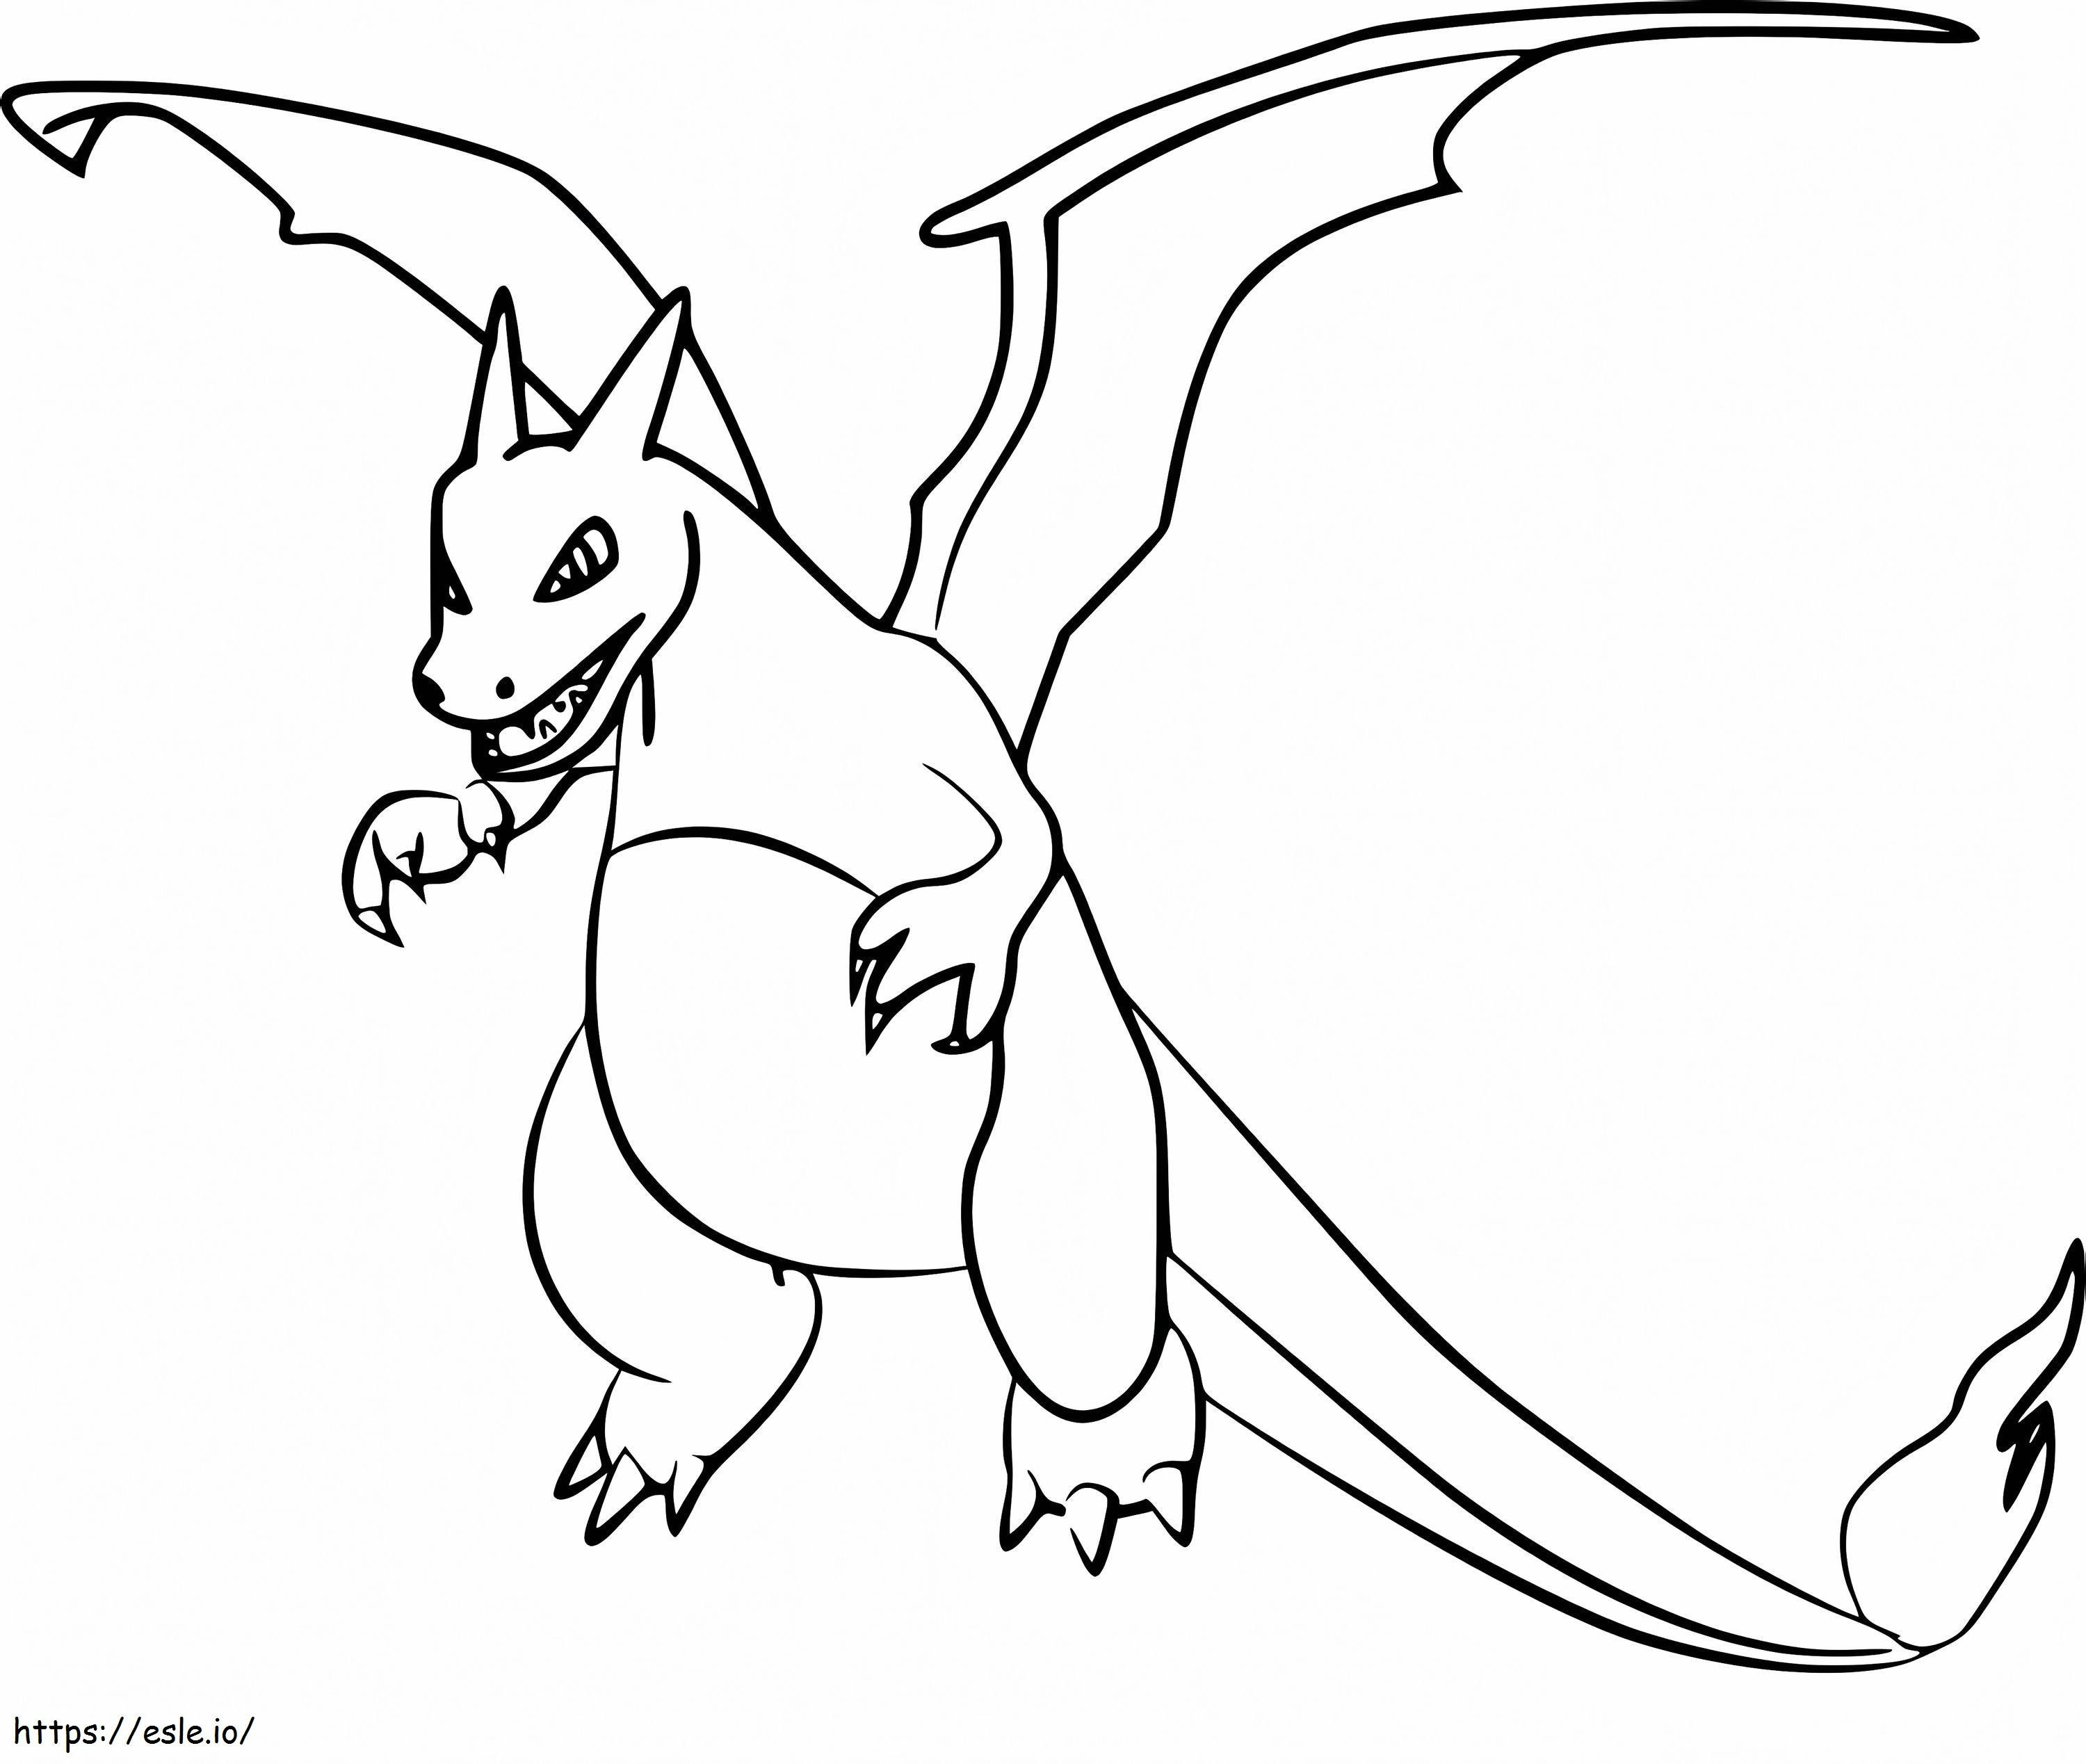 Dracaufeu Pokemon GO 1024X866 coloring page